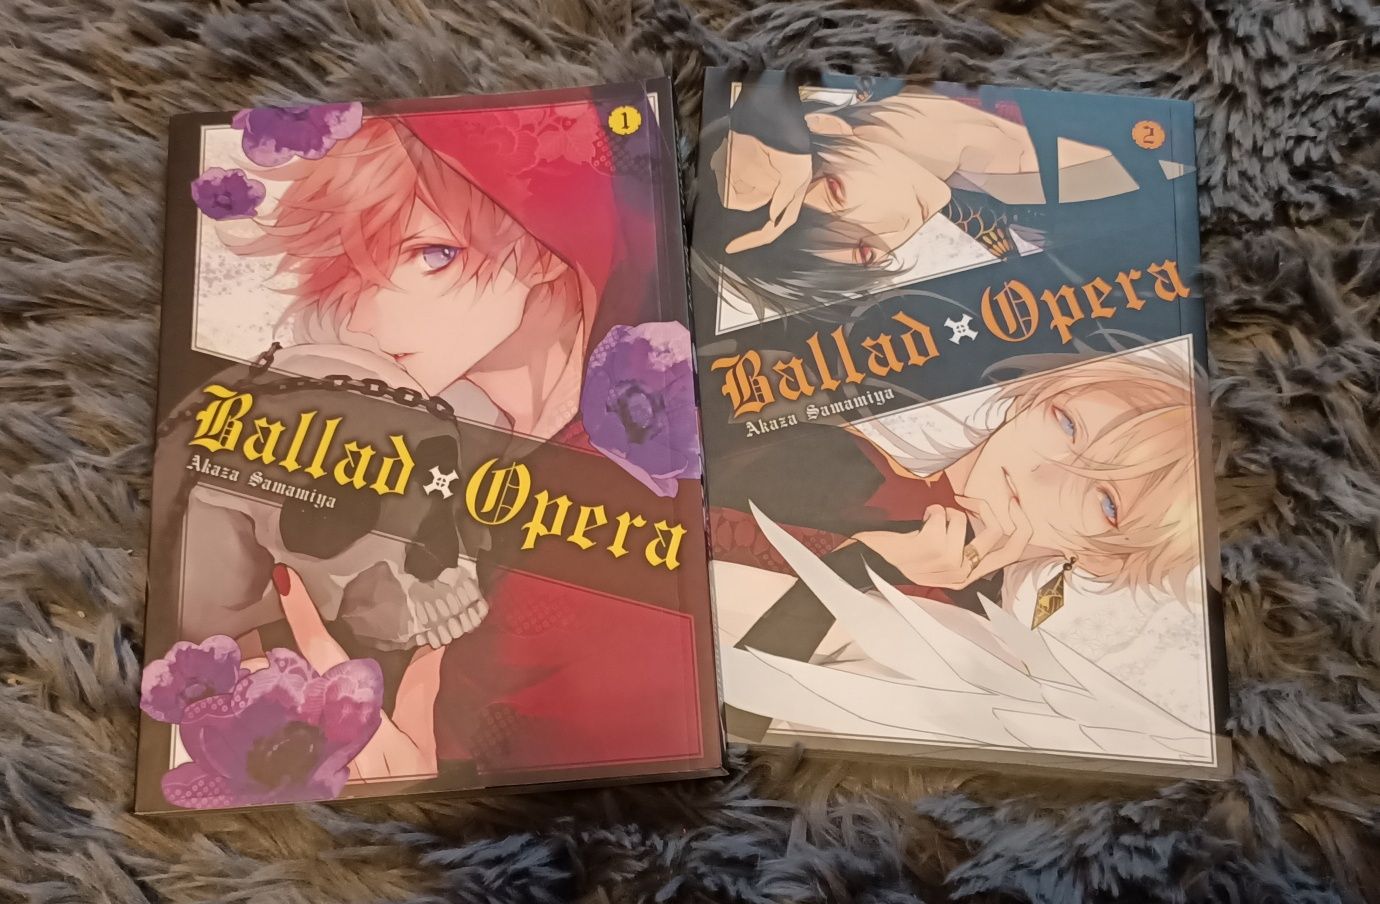 Ballad x Opera, 1 i 2 tom